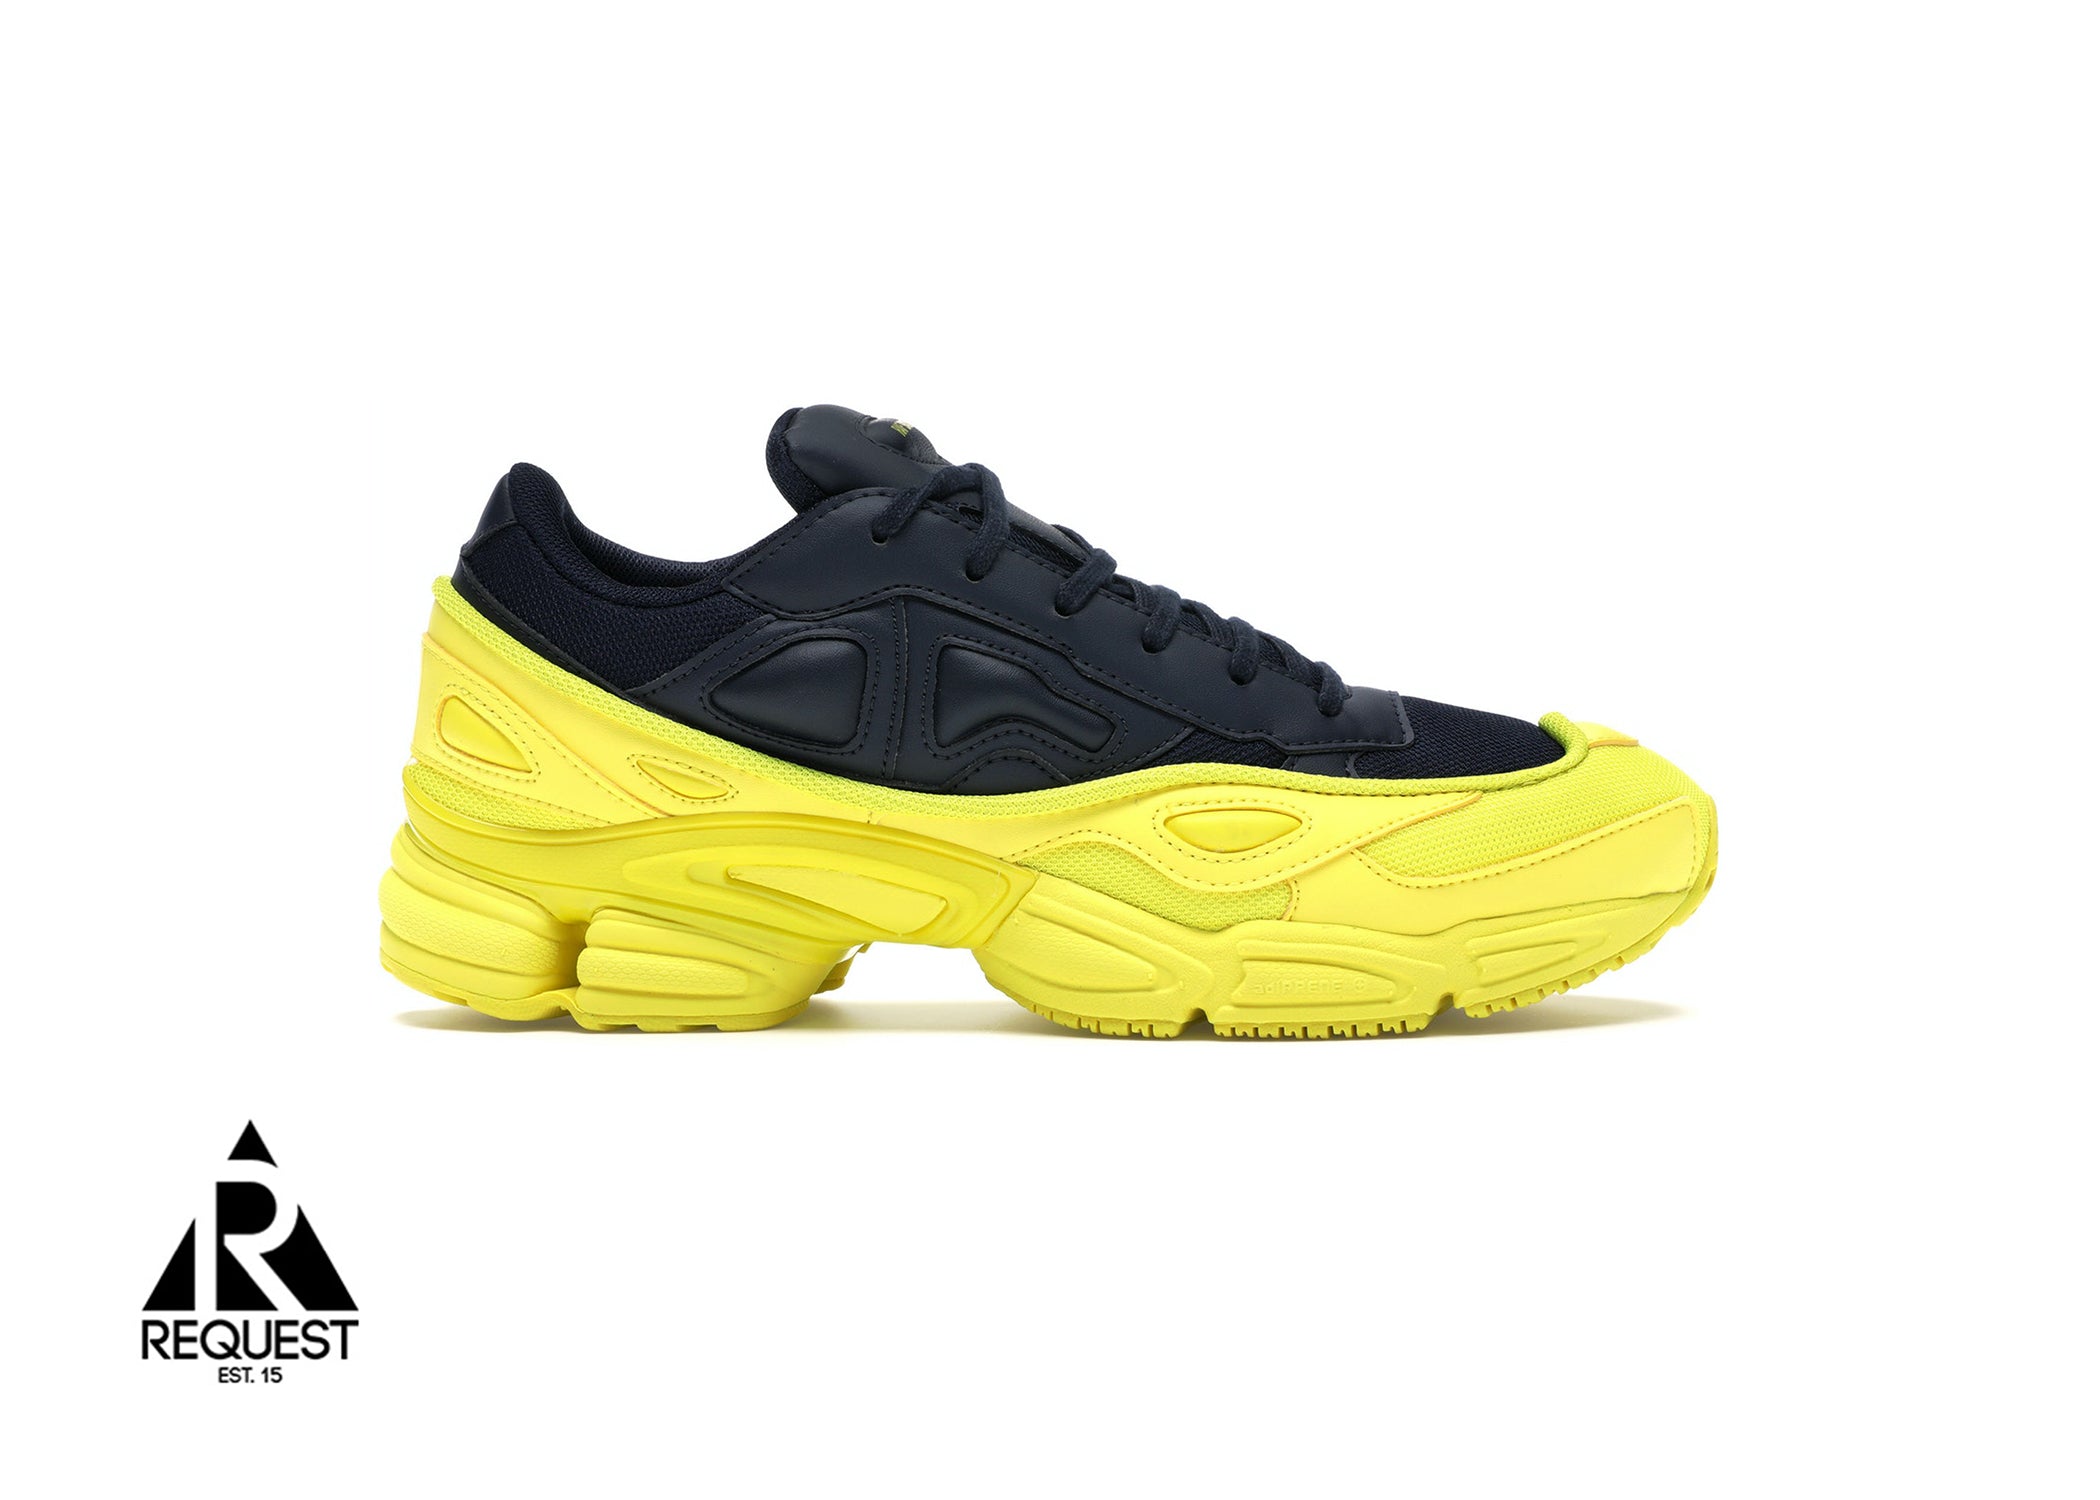 Adidas Raf Simons Ozweego “Bright Yellow”